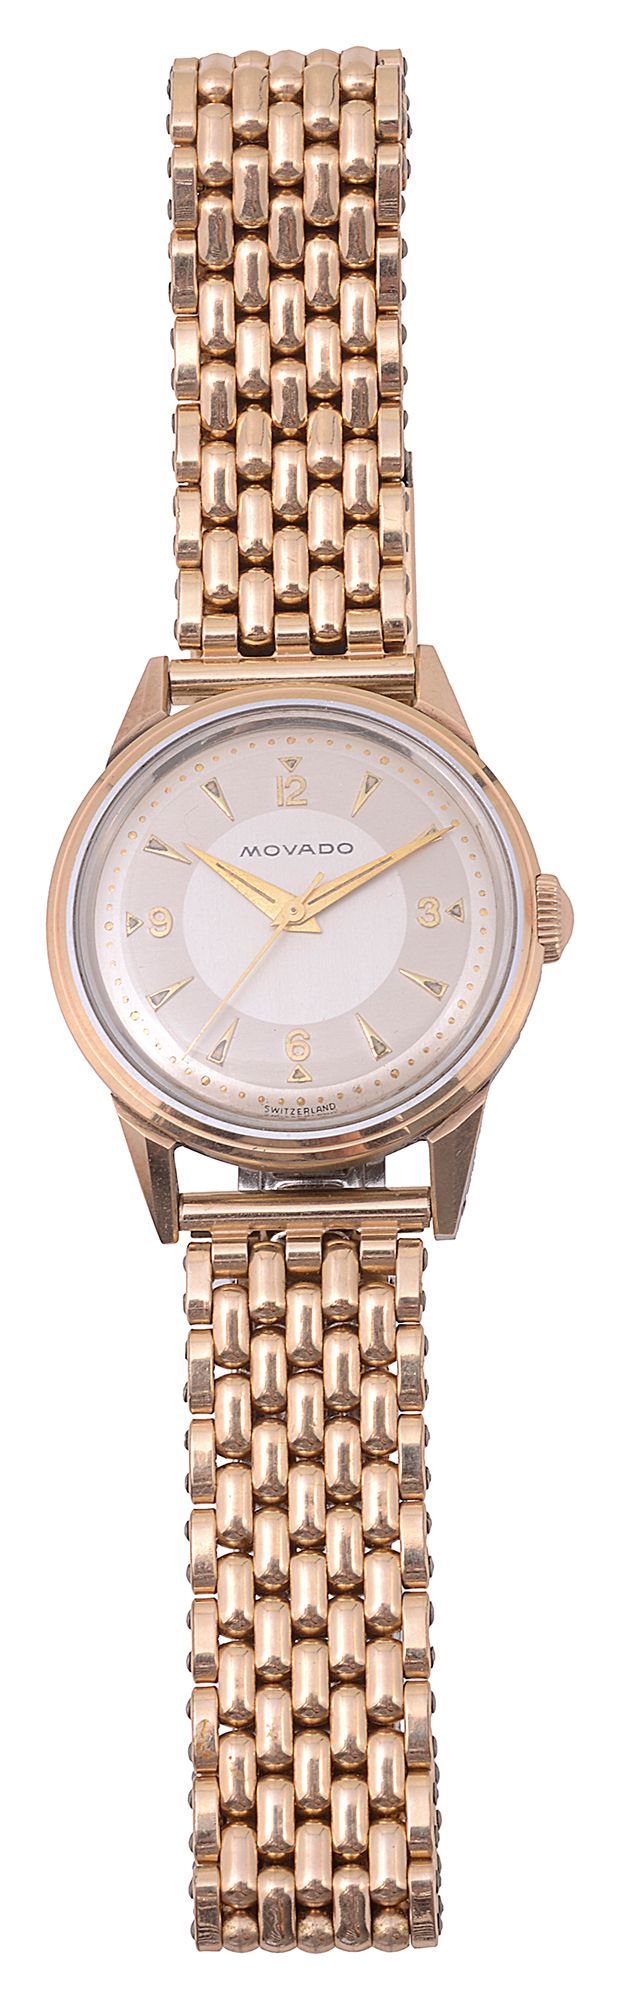 A 1950s Gentleman's Movado wristwatch